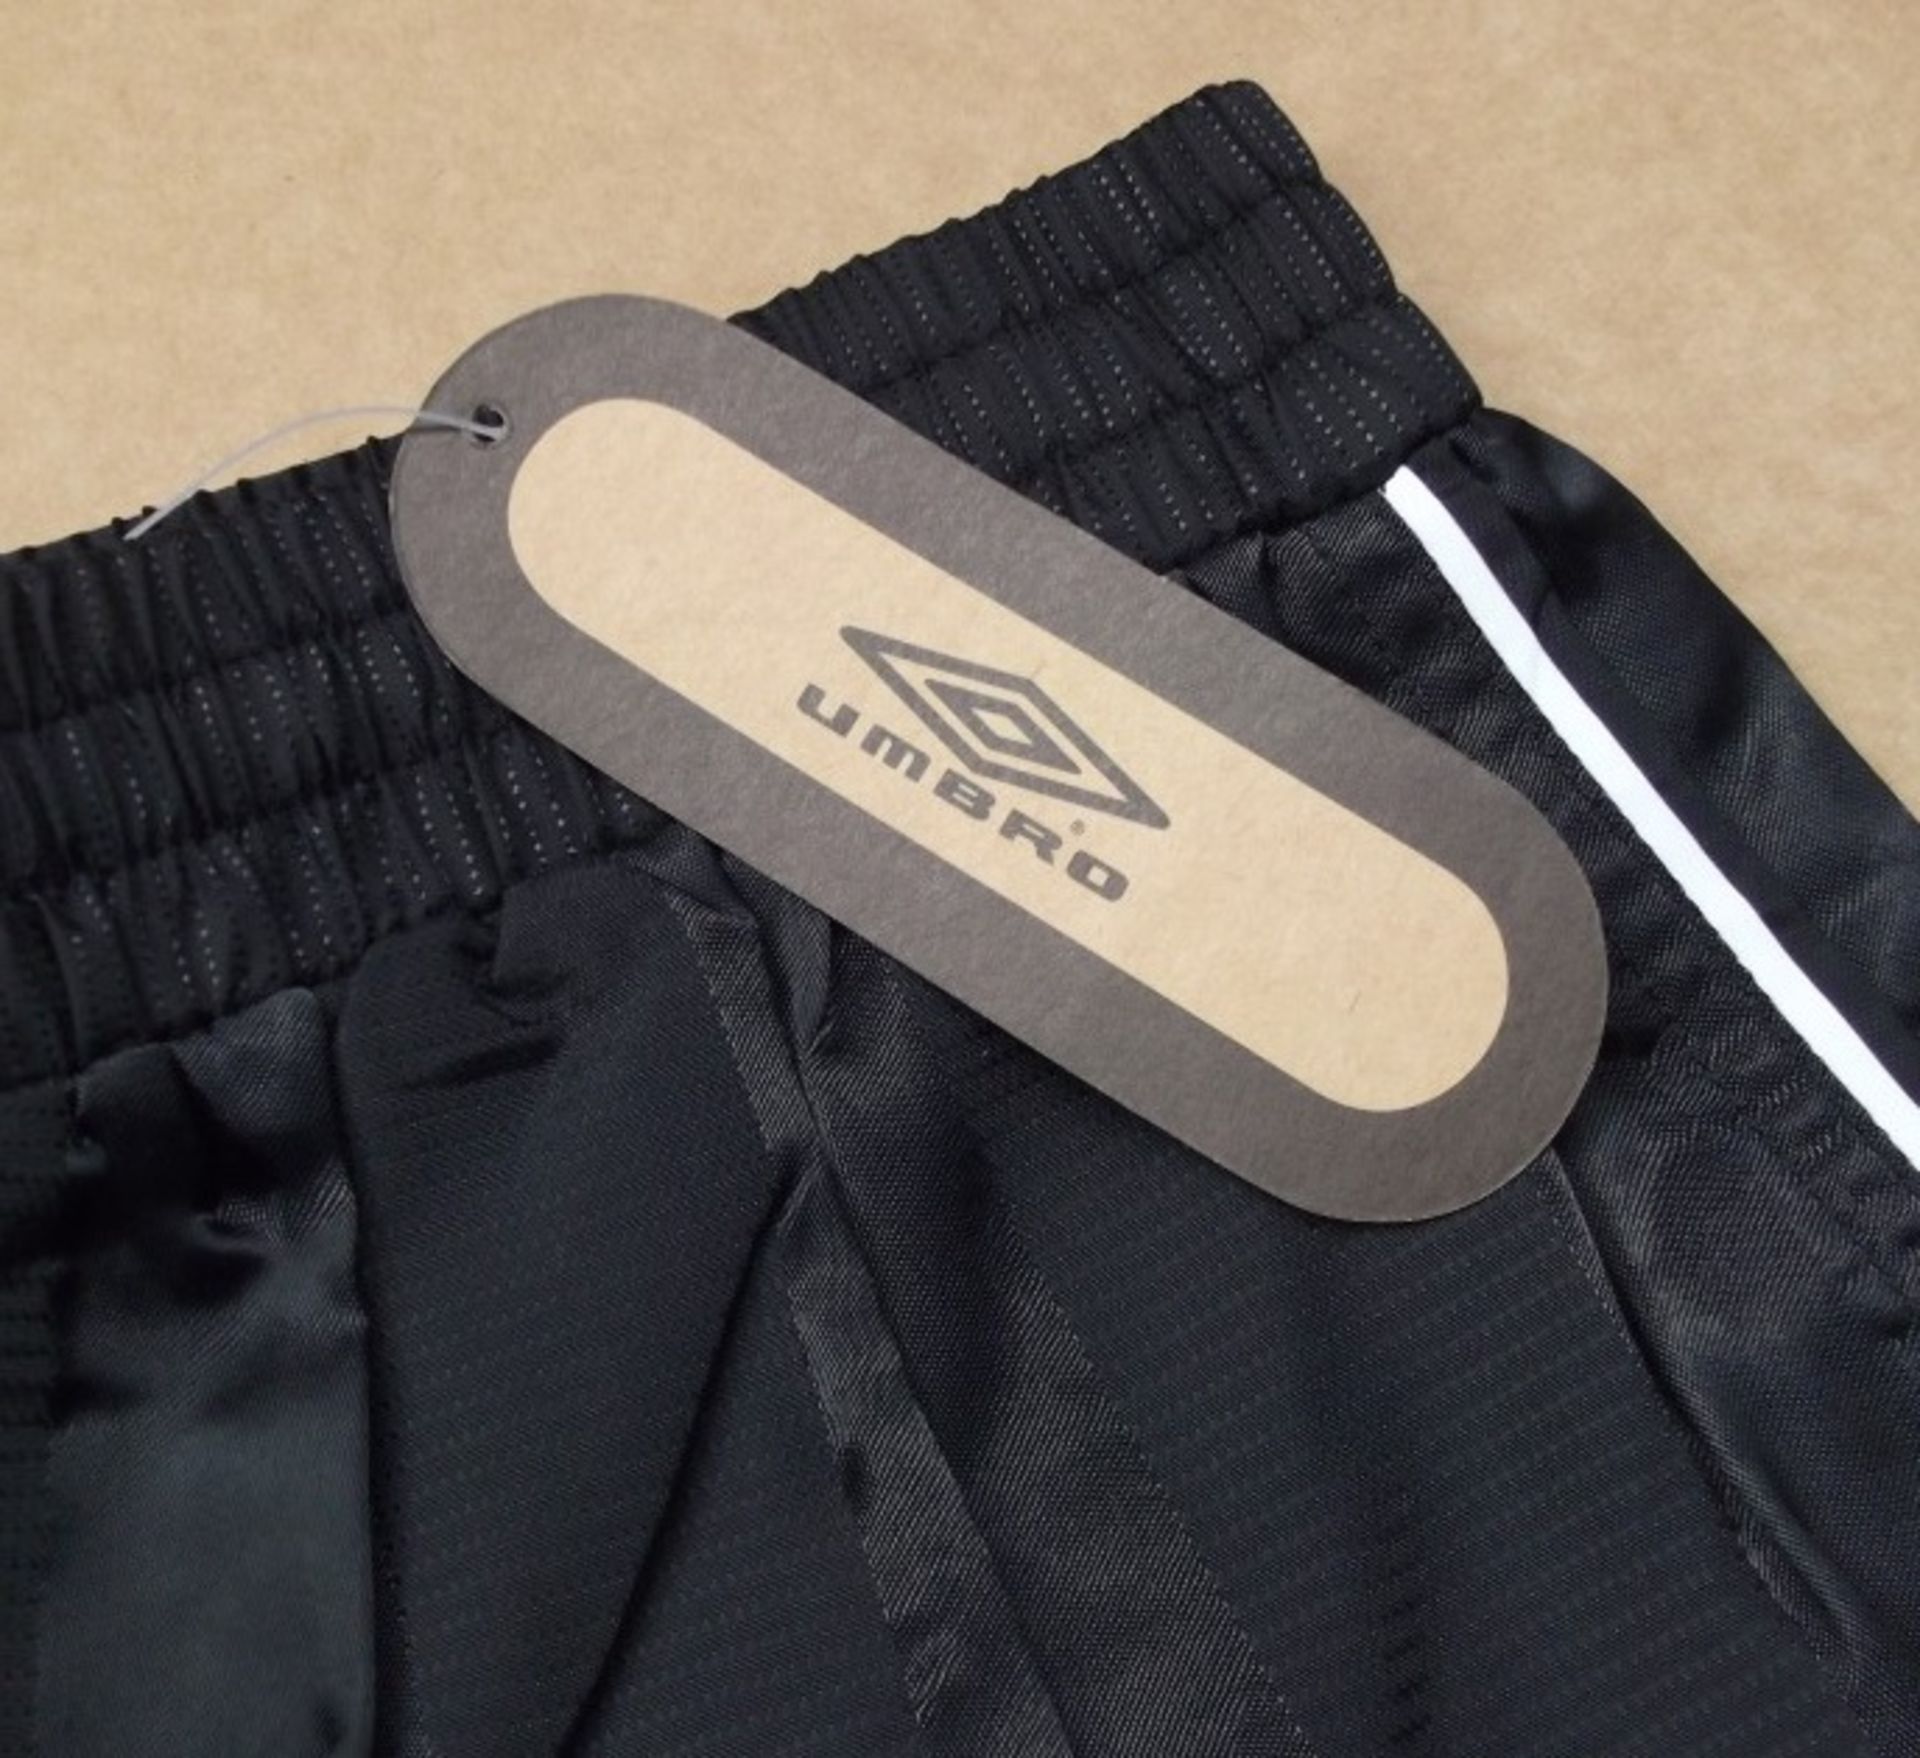 92 x Pairs Of Umbro "AZZURRI" Boys Sports Shorts - Colour: Black With White Detailing - Size: - Image 4 of 5